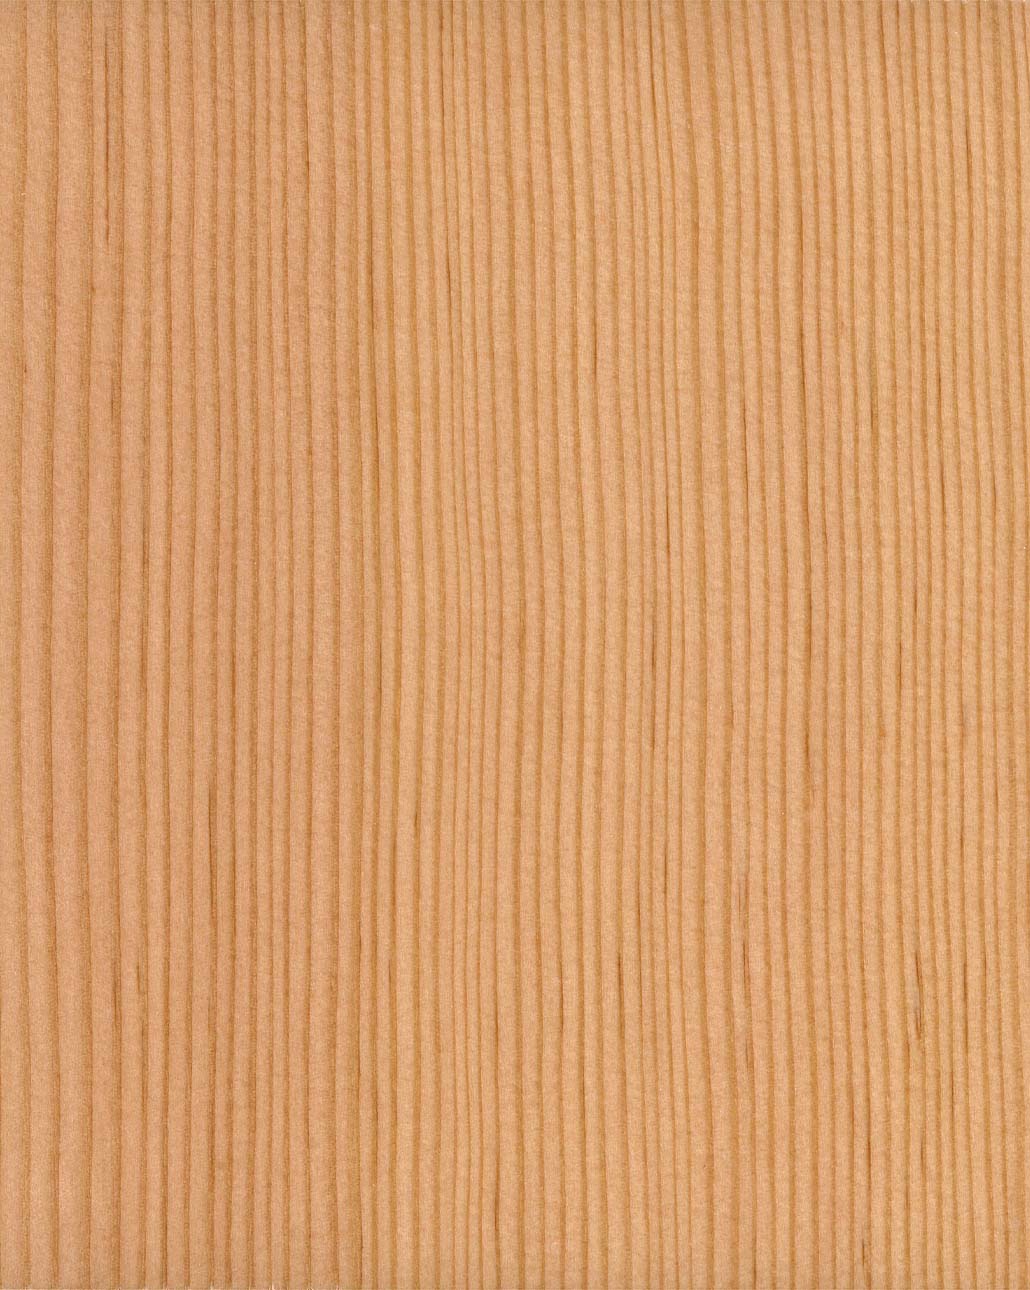 Oregon pine veneer panel